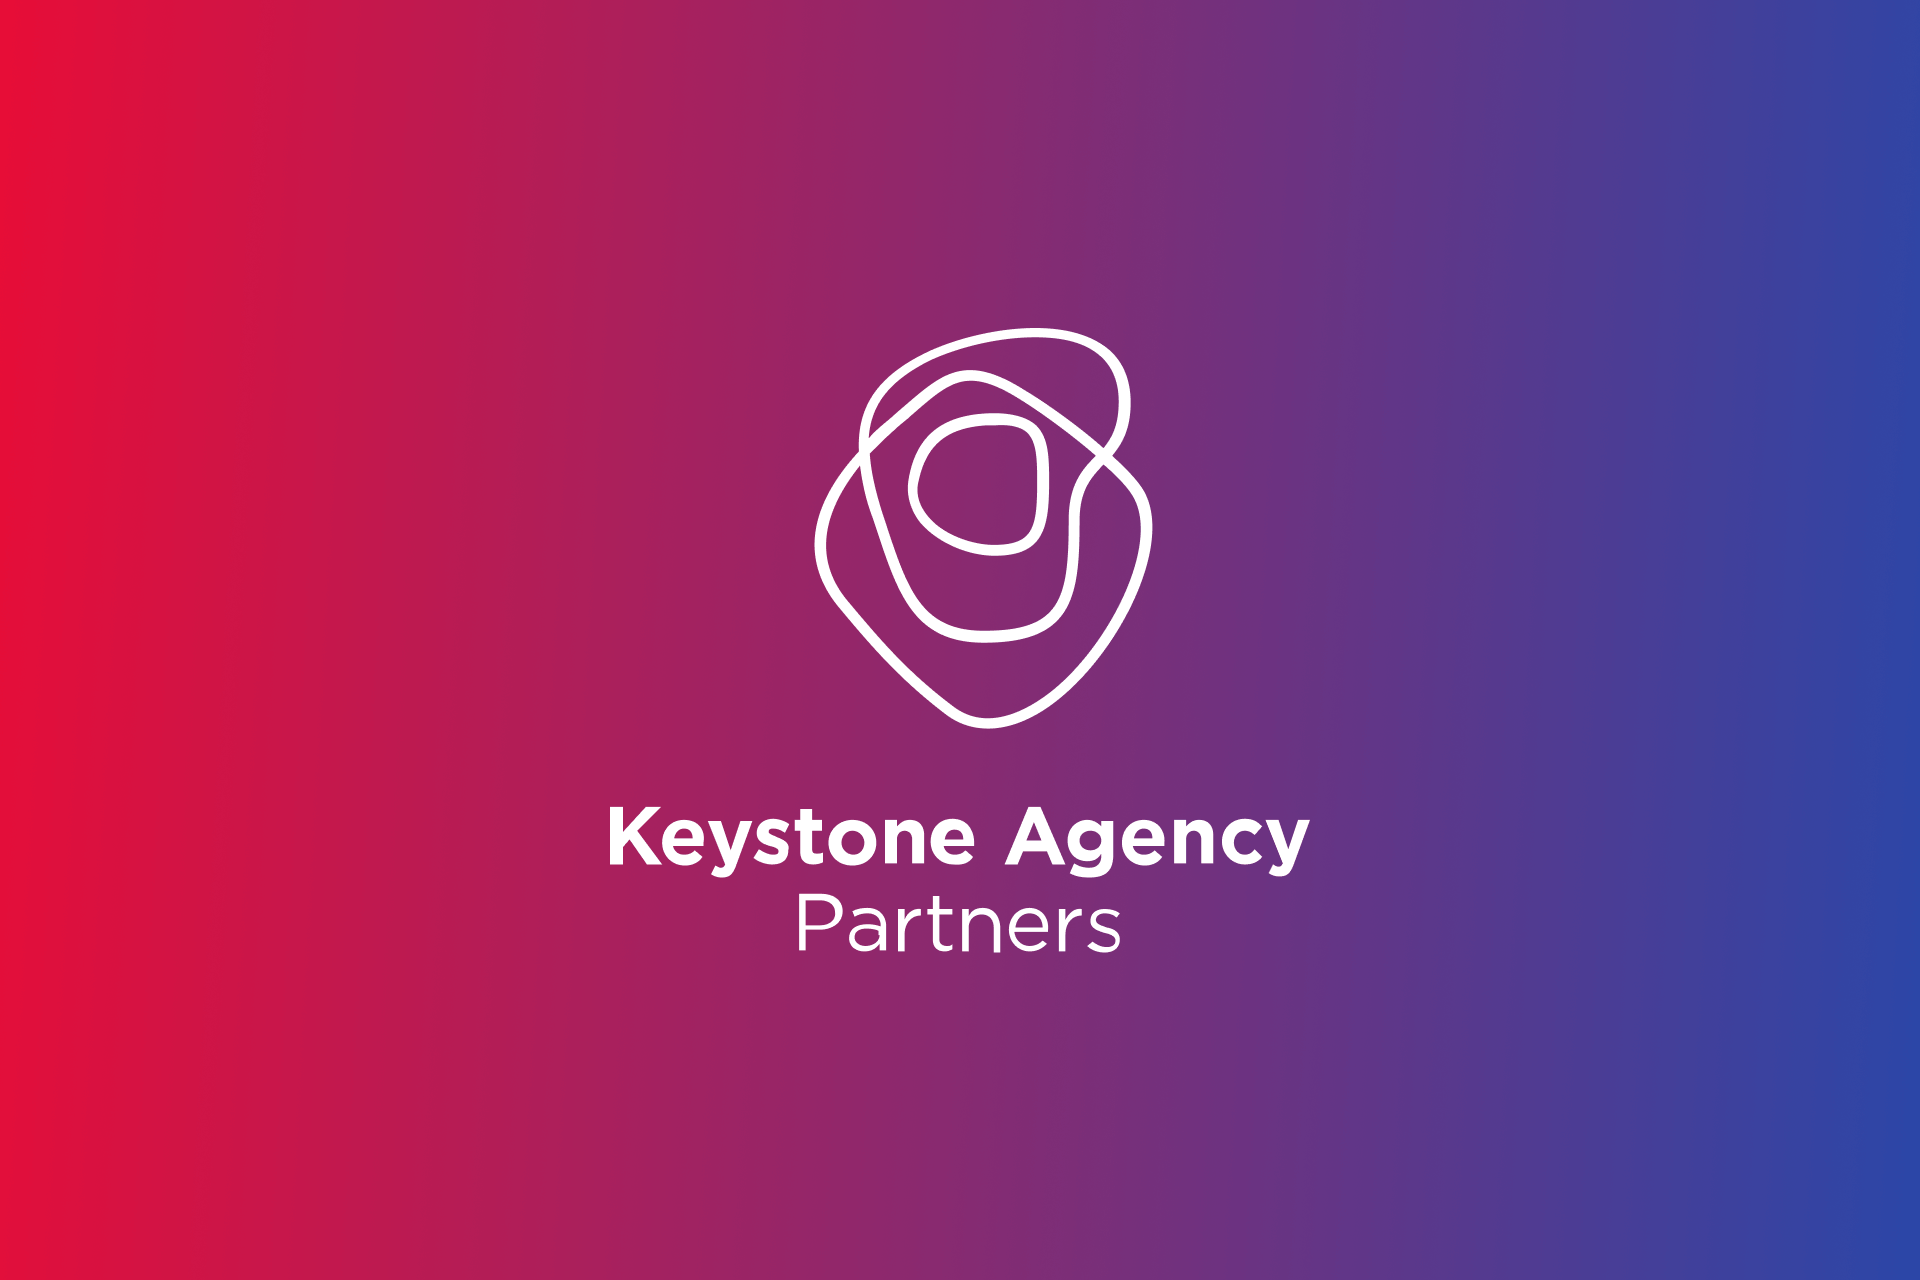 Keystone Agency Partners